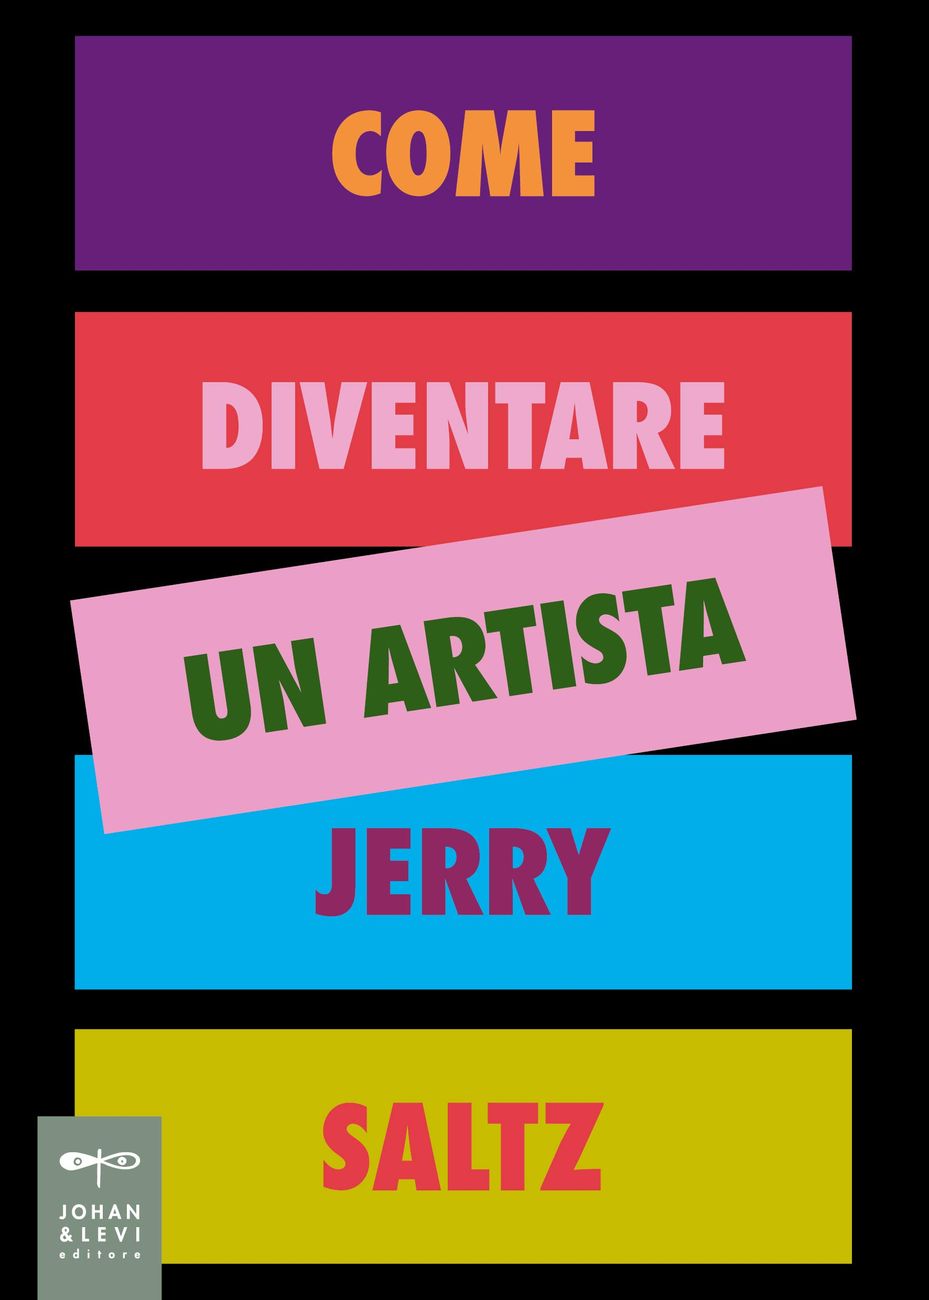 Jerry Saltz – Come diventare un artista (Johan and Levi, Monza 2020)